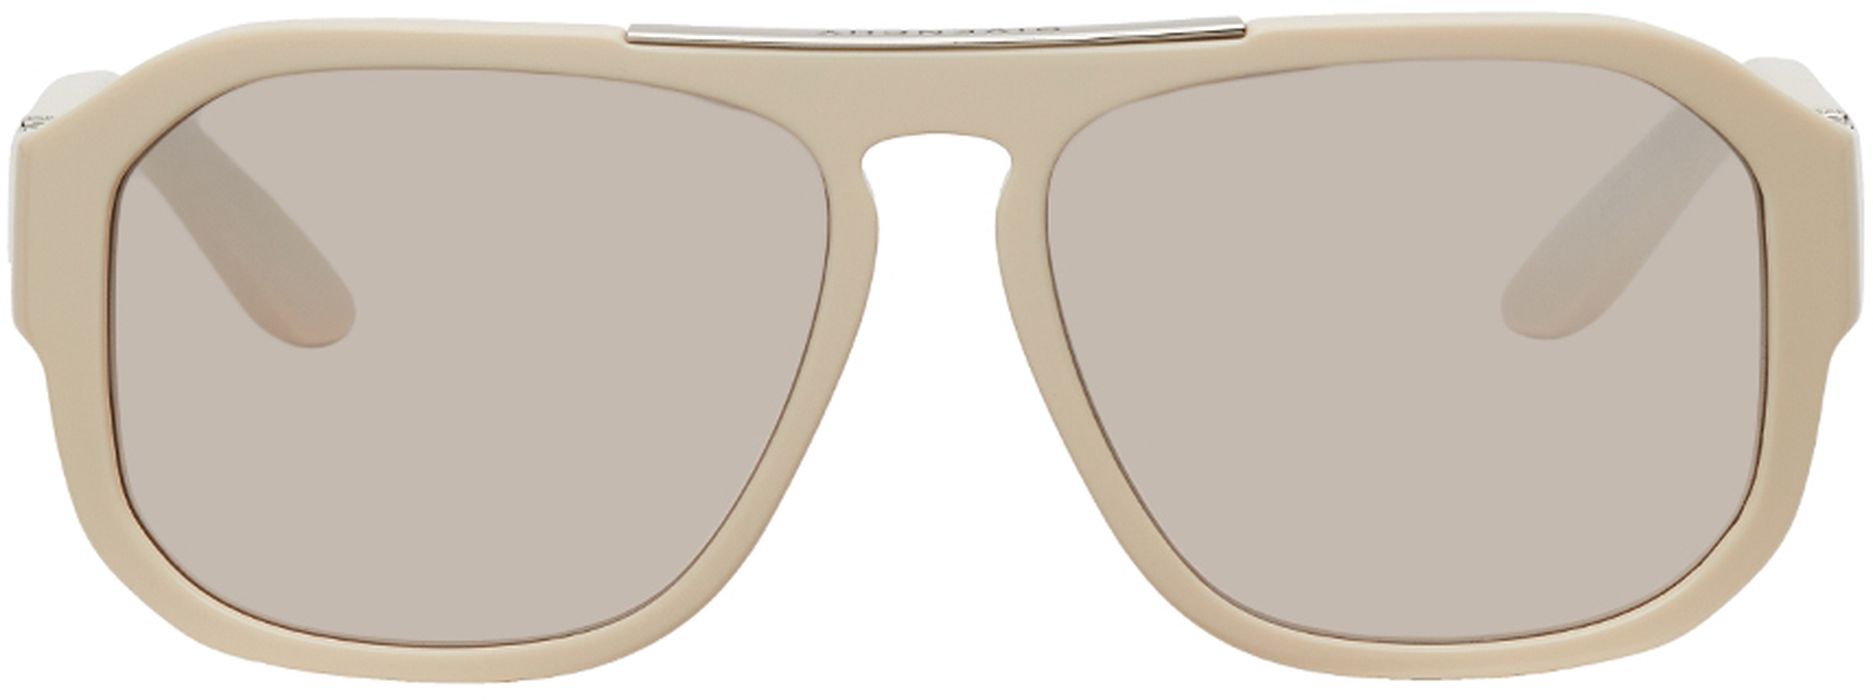 Givenchy Off-White GV Hinge Aviator Sunglasses